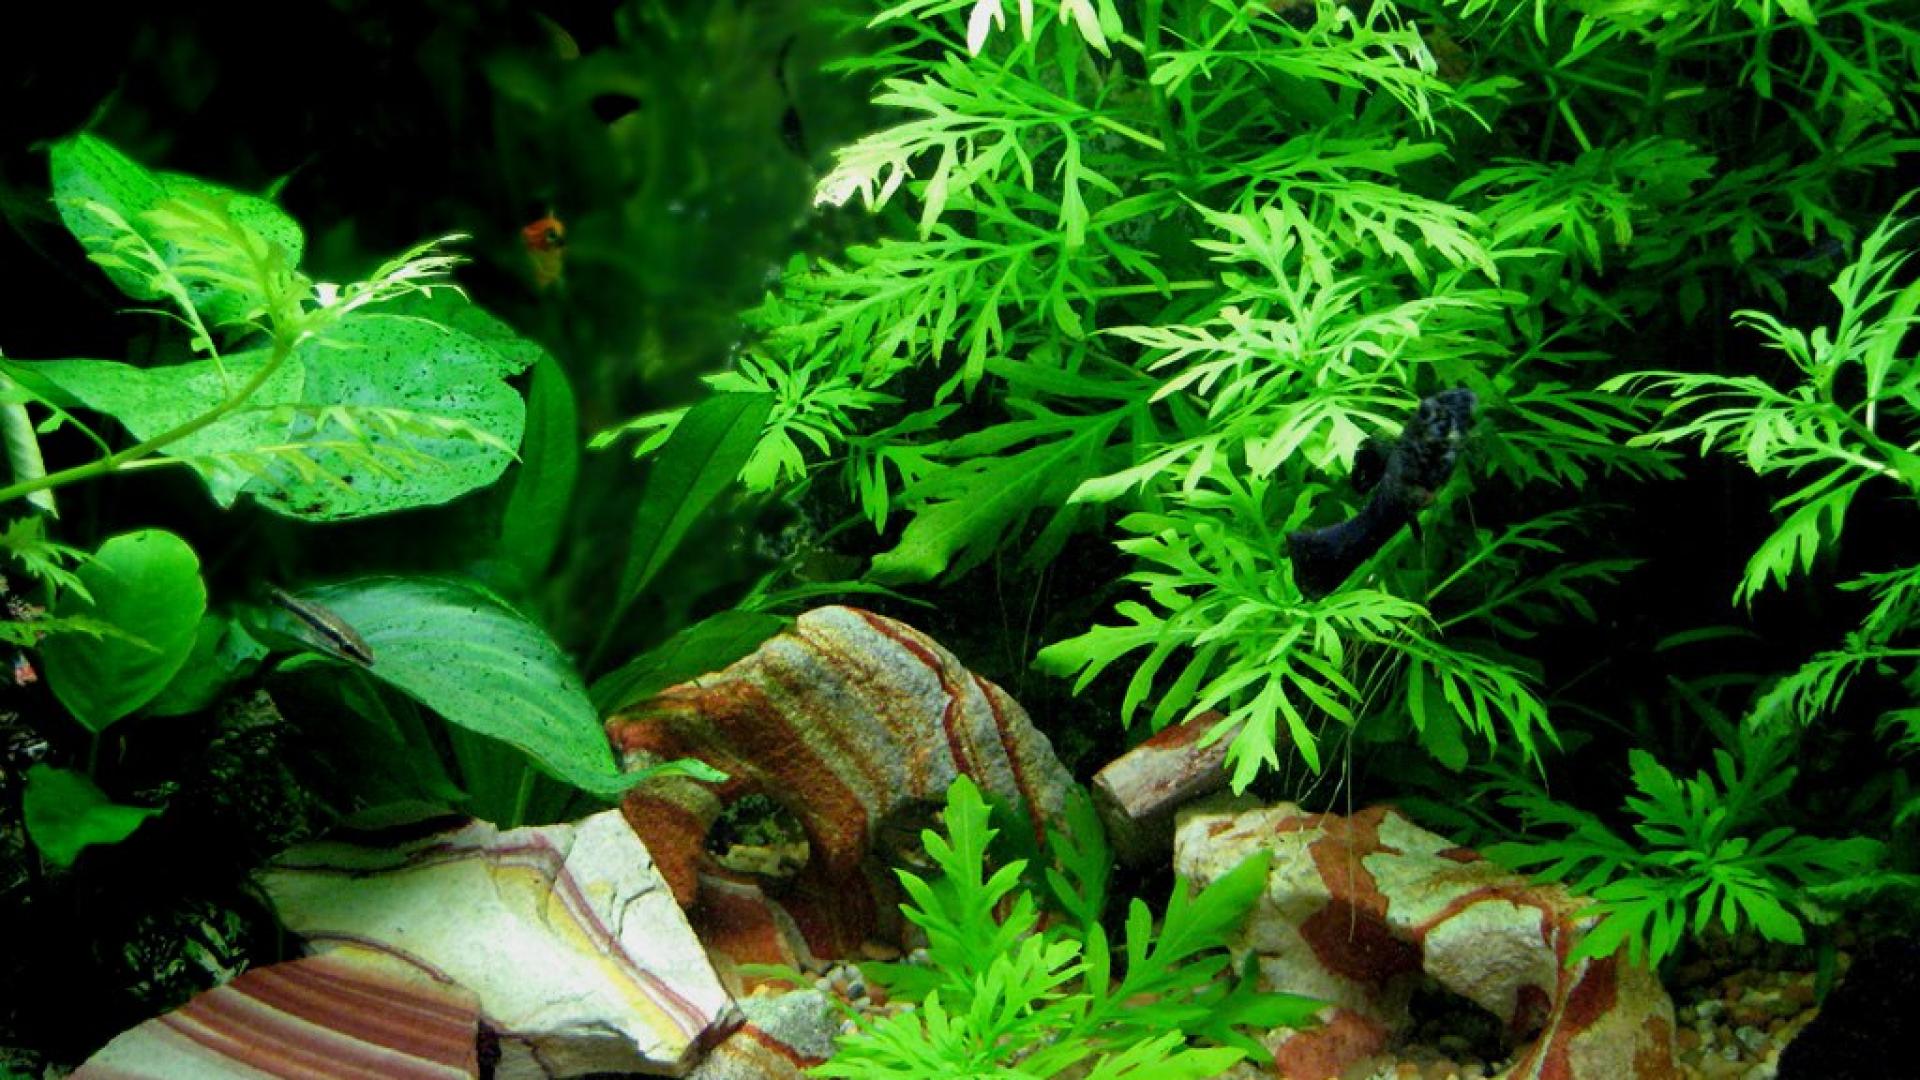 UNDERWATER AQUARIUM PLANTS FISH HD WALLPAPER WALLPAPER 27539